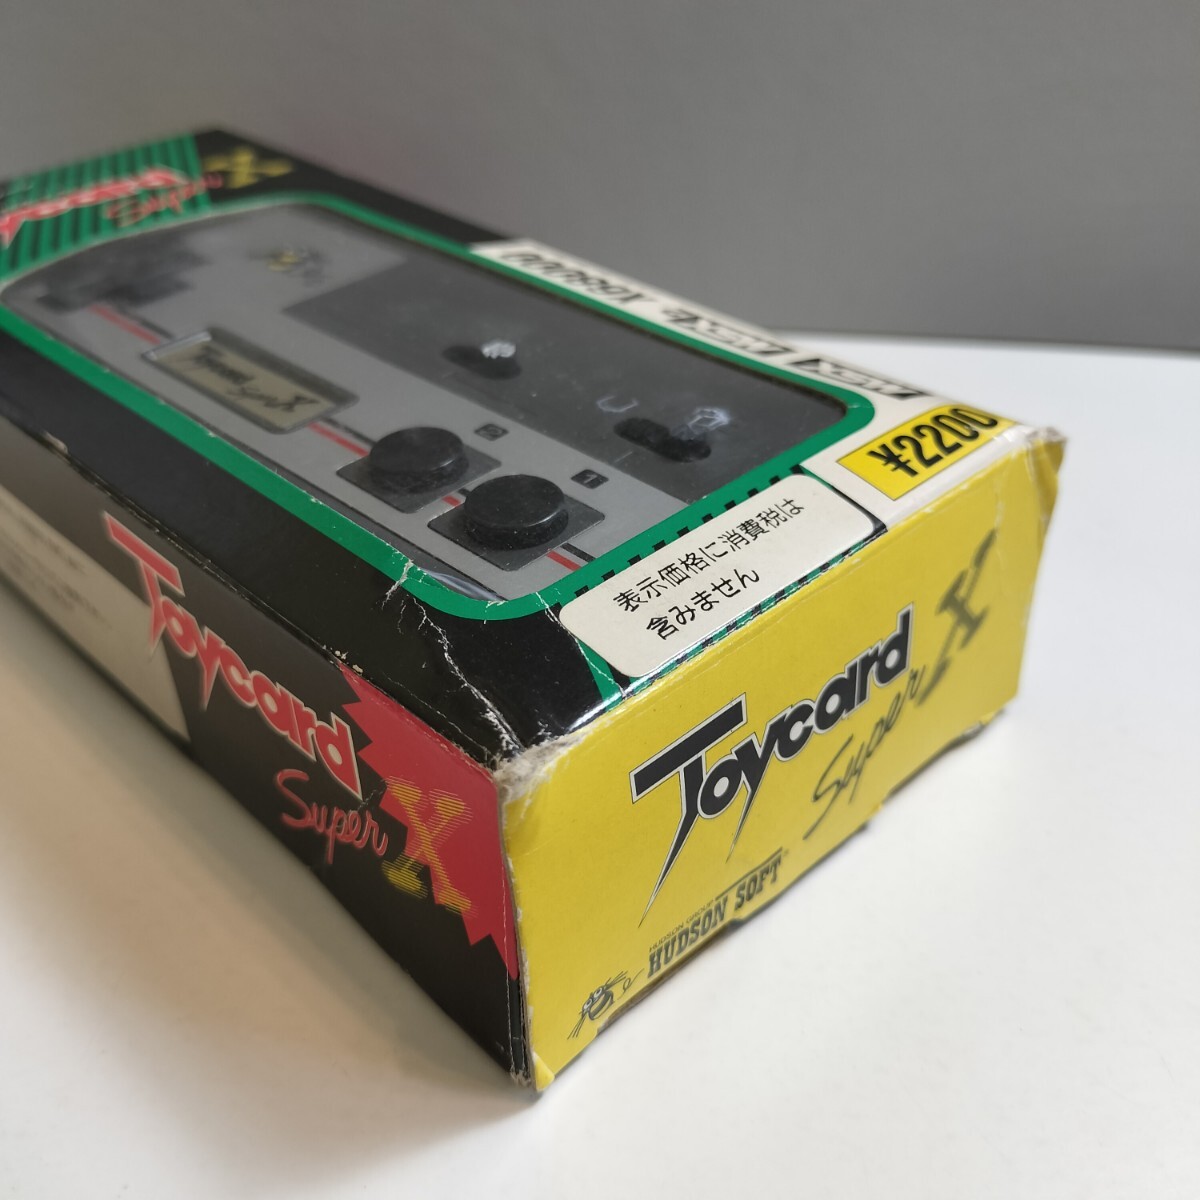 HUDSON SOFT Joycard SuperX ハドソン ジョイカード MSX MSX2 X68000 コントローラの画像3